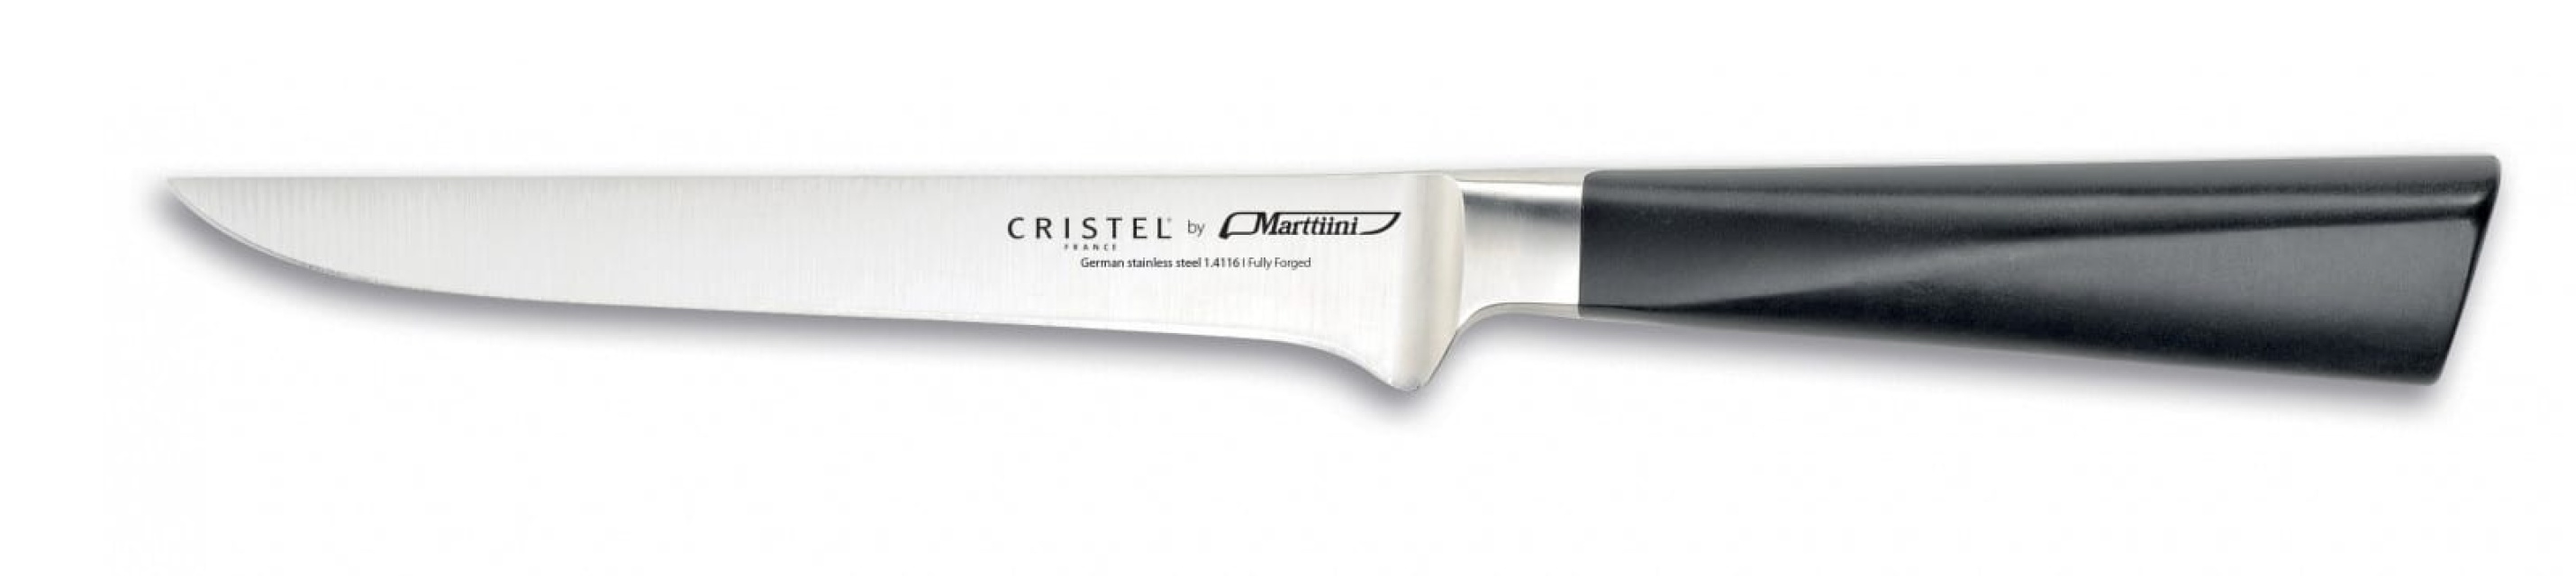 Urbeningskniv, 15 cm - Cristel